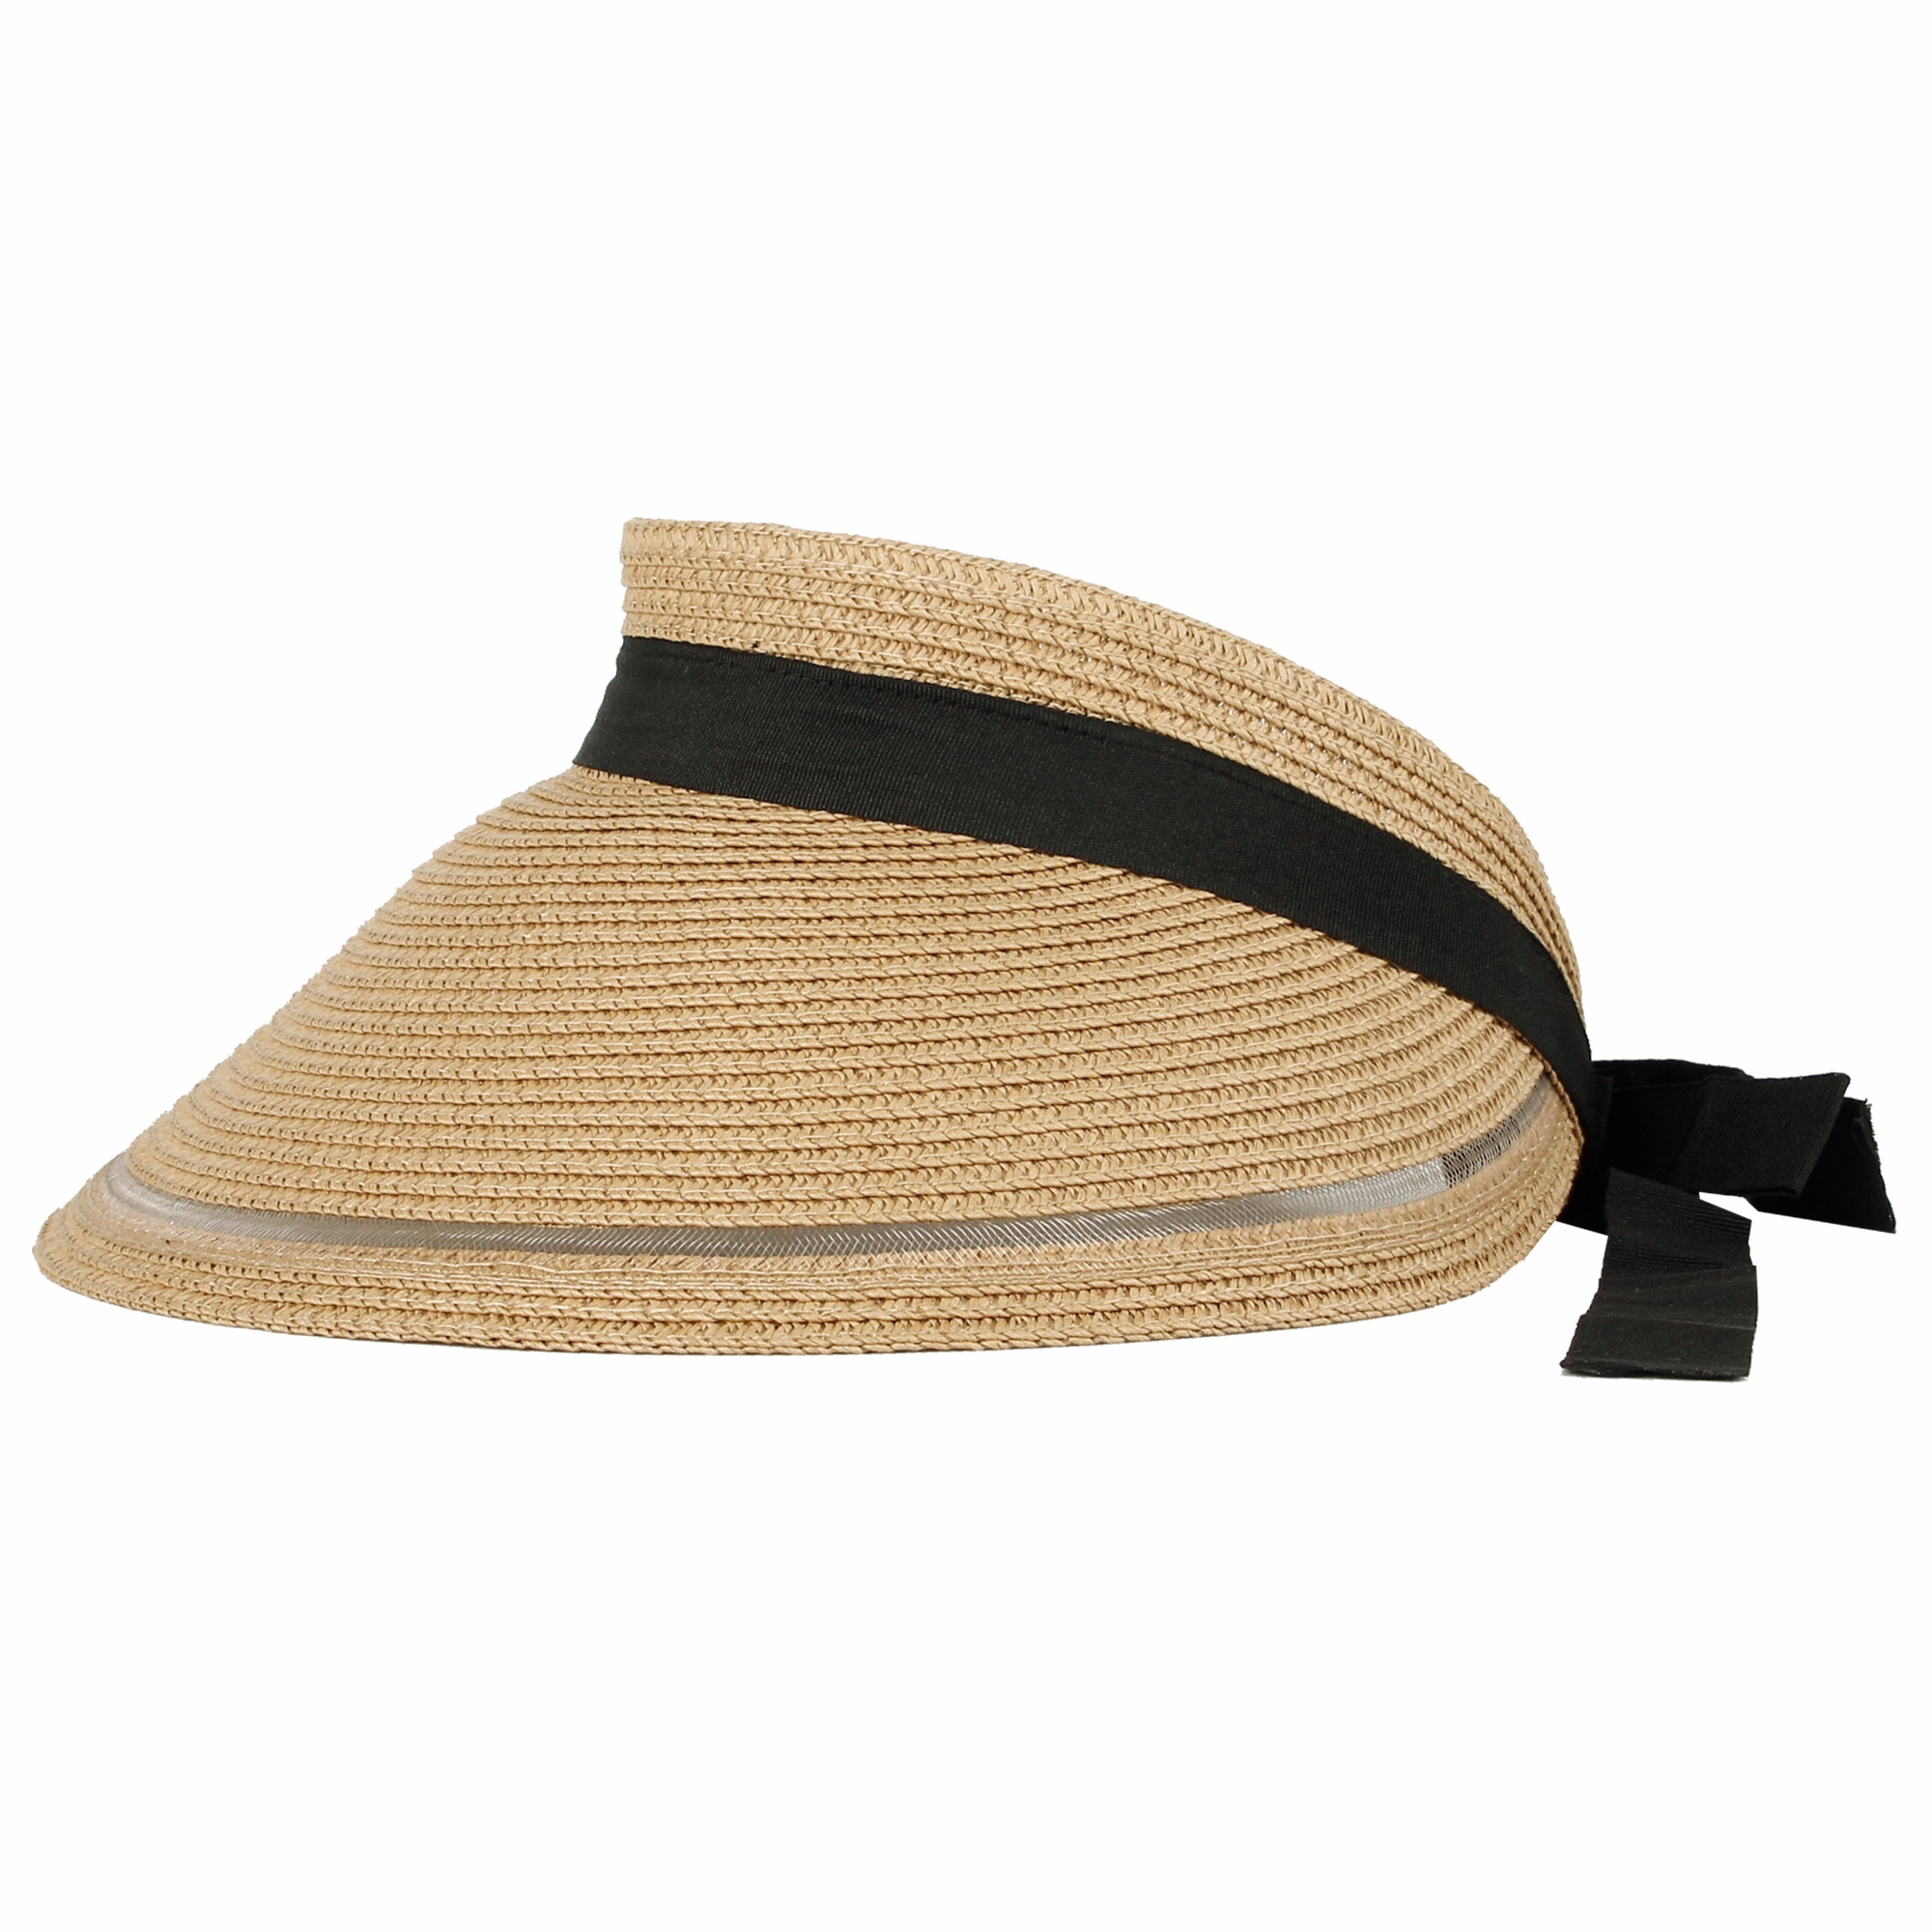 WITHMOONS Womens Wide Brim Packable Sun Visor Summer Beach Hat SLV1280 ...